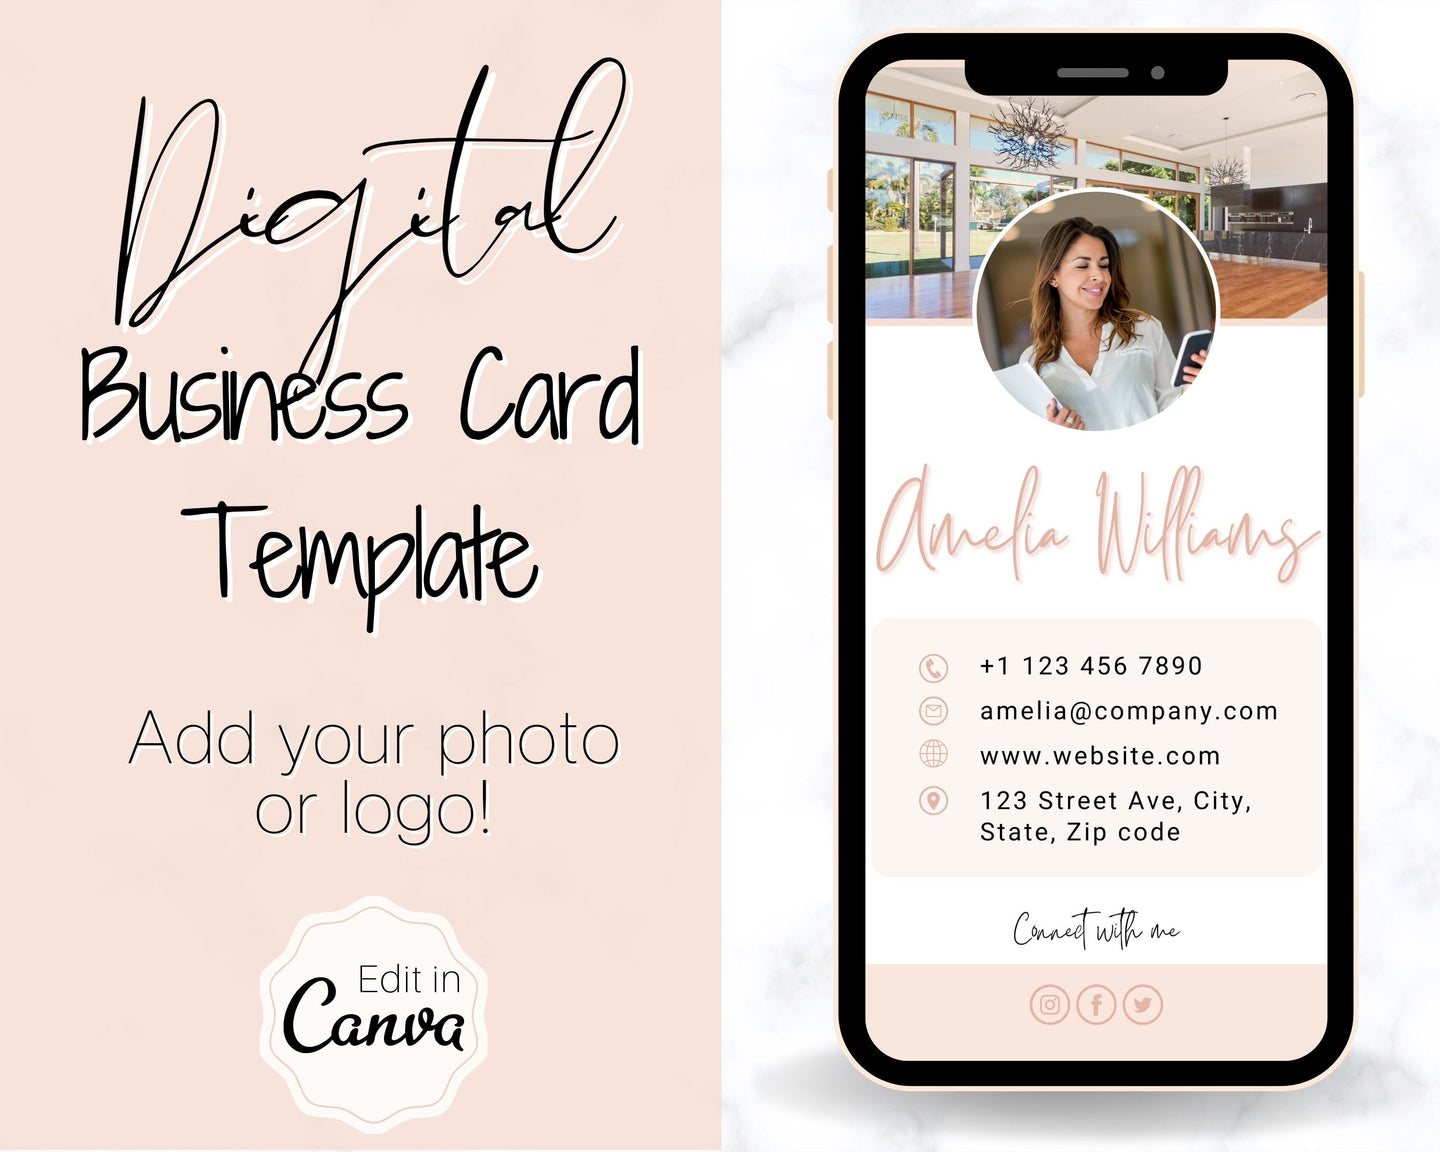 Digital Business Card Template. DIY add logo & photo! Editable Canva Design. Modern, Realtor Marketing, Real Estate, Realty Professional | Pink Style 4